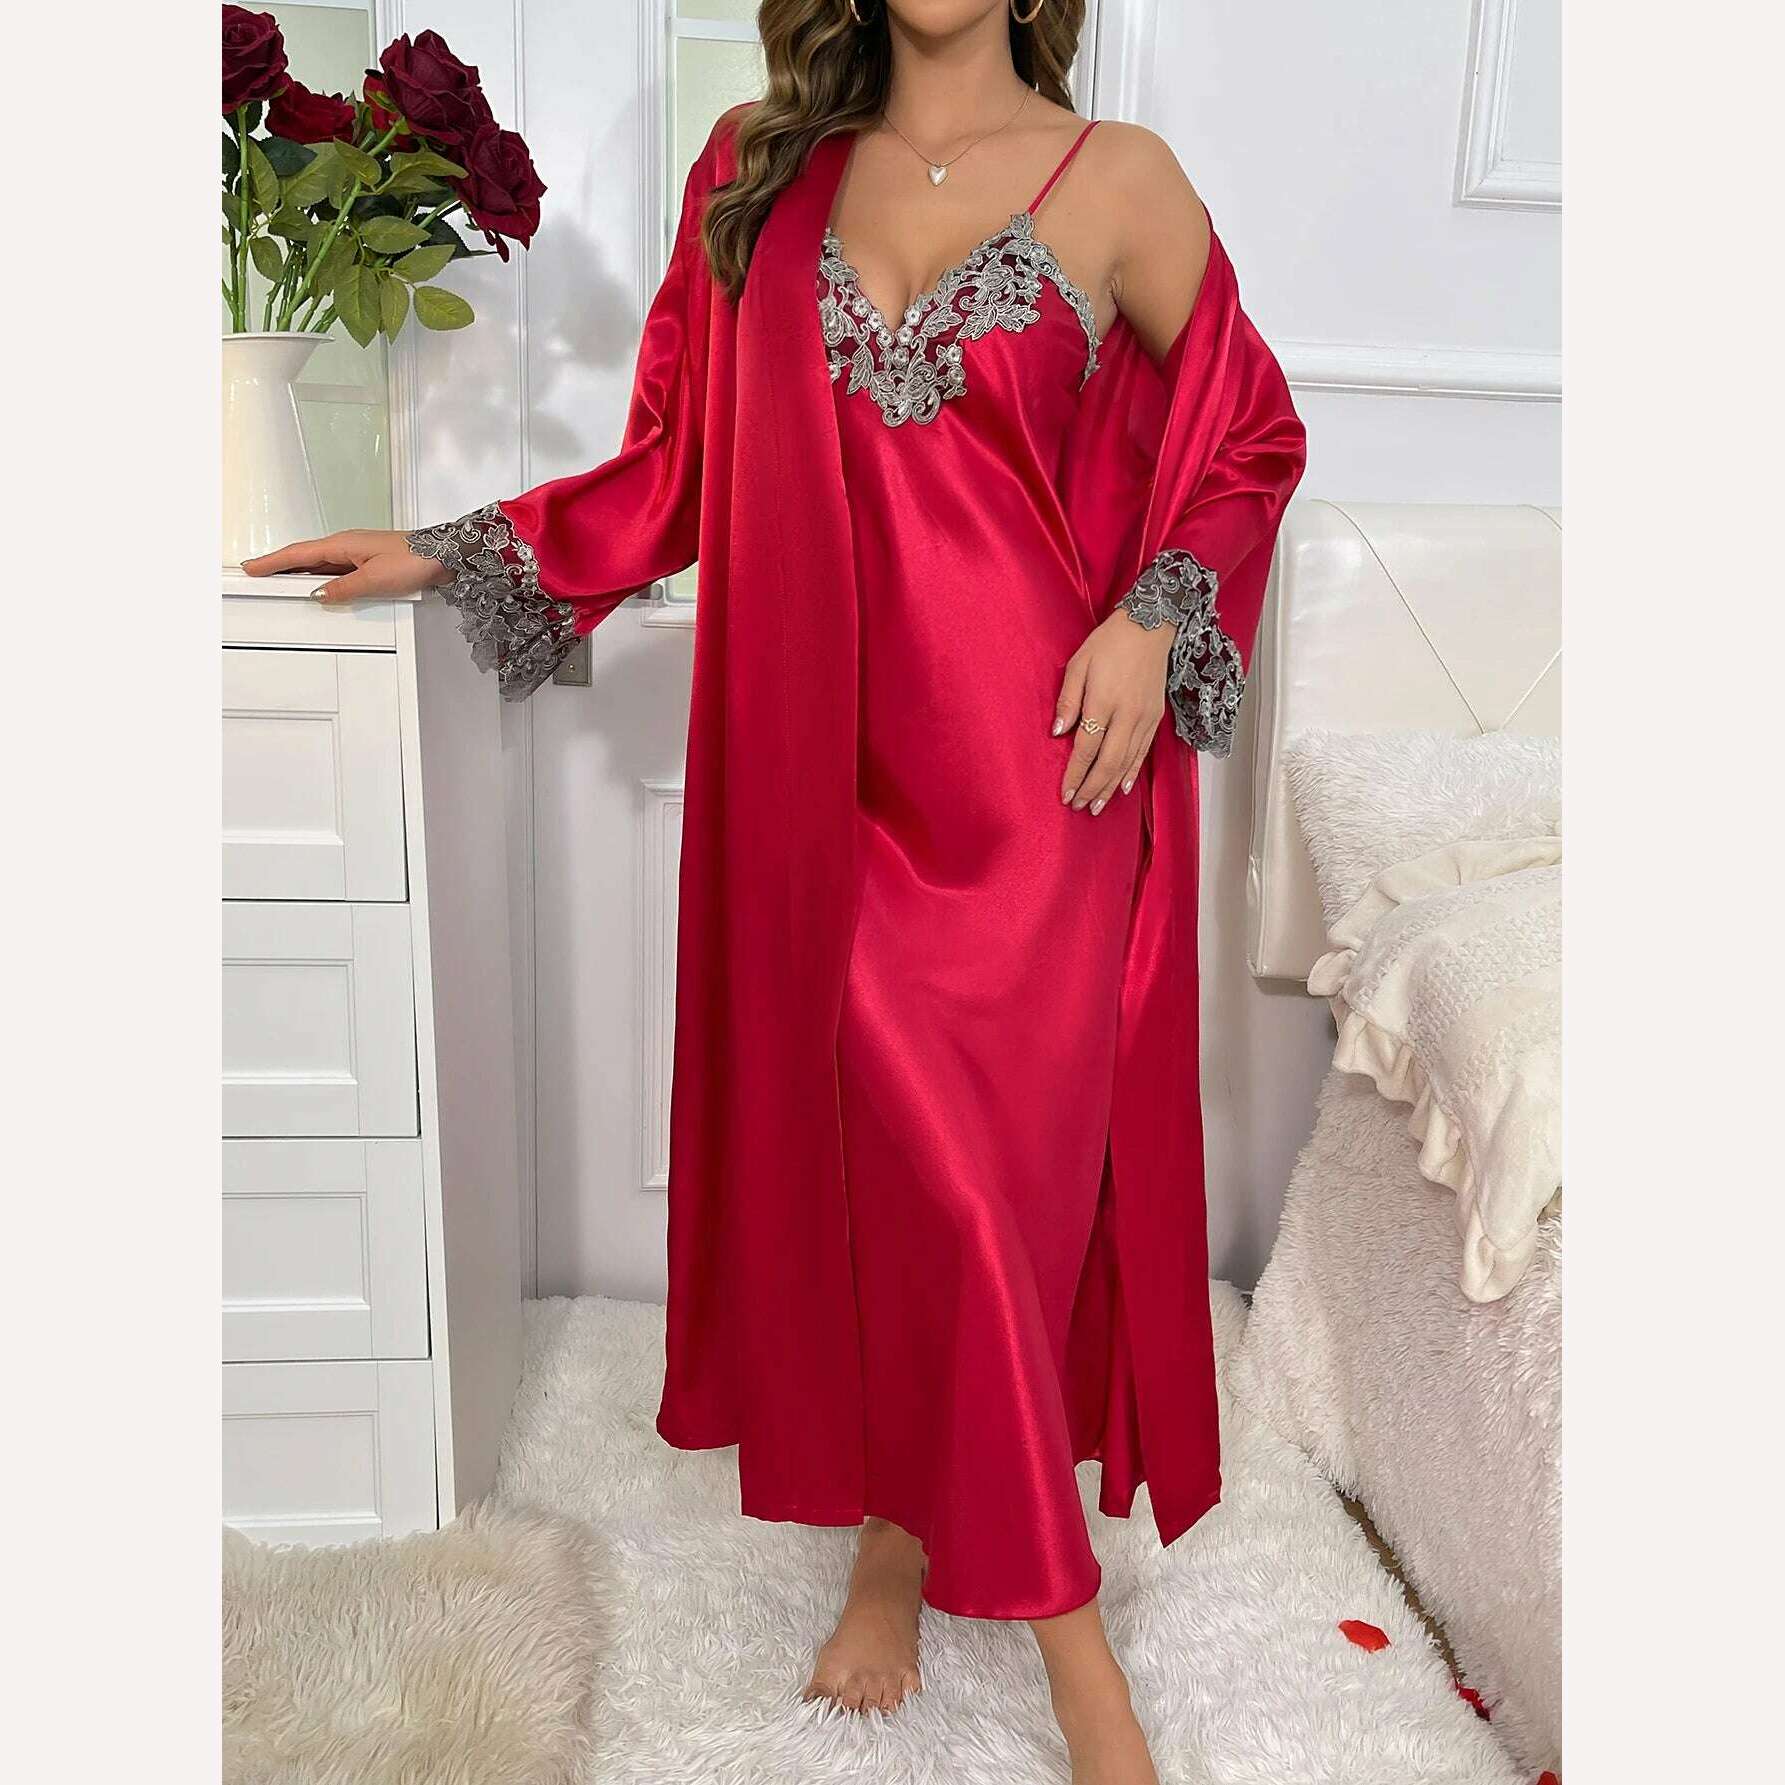 KIMLUD, 2cs Contrast Lace  Long Sleeve Belted Robe V Neck Slip Dress Sexy Elegant Women Pajamas  Sets, Red / XL, KIMLUD Women's Clothes